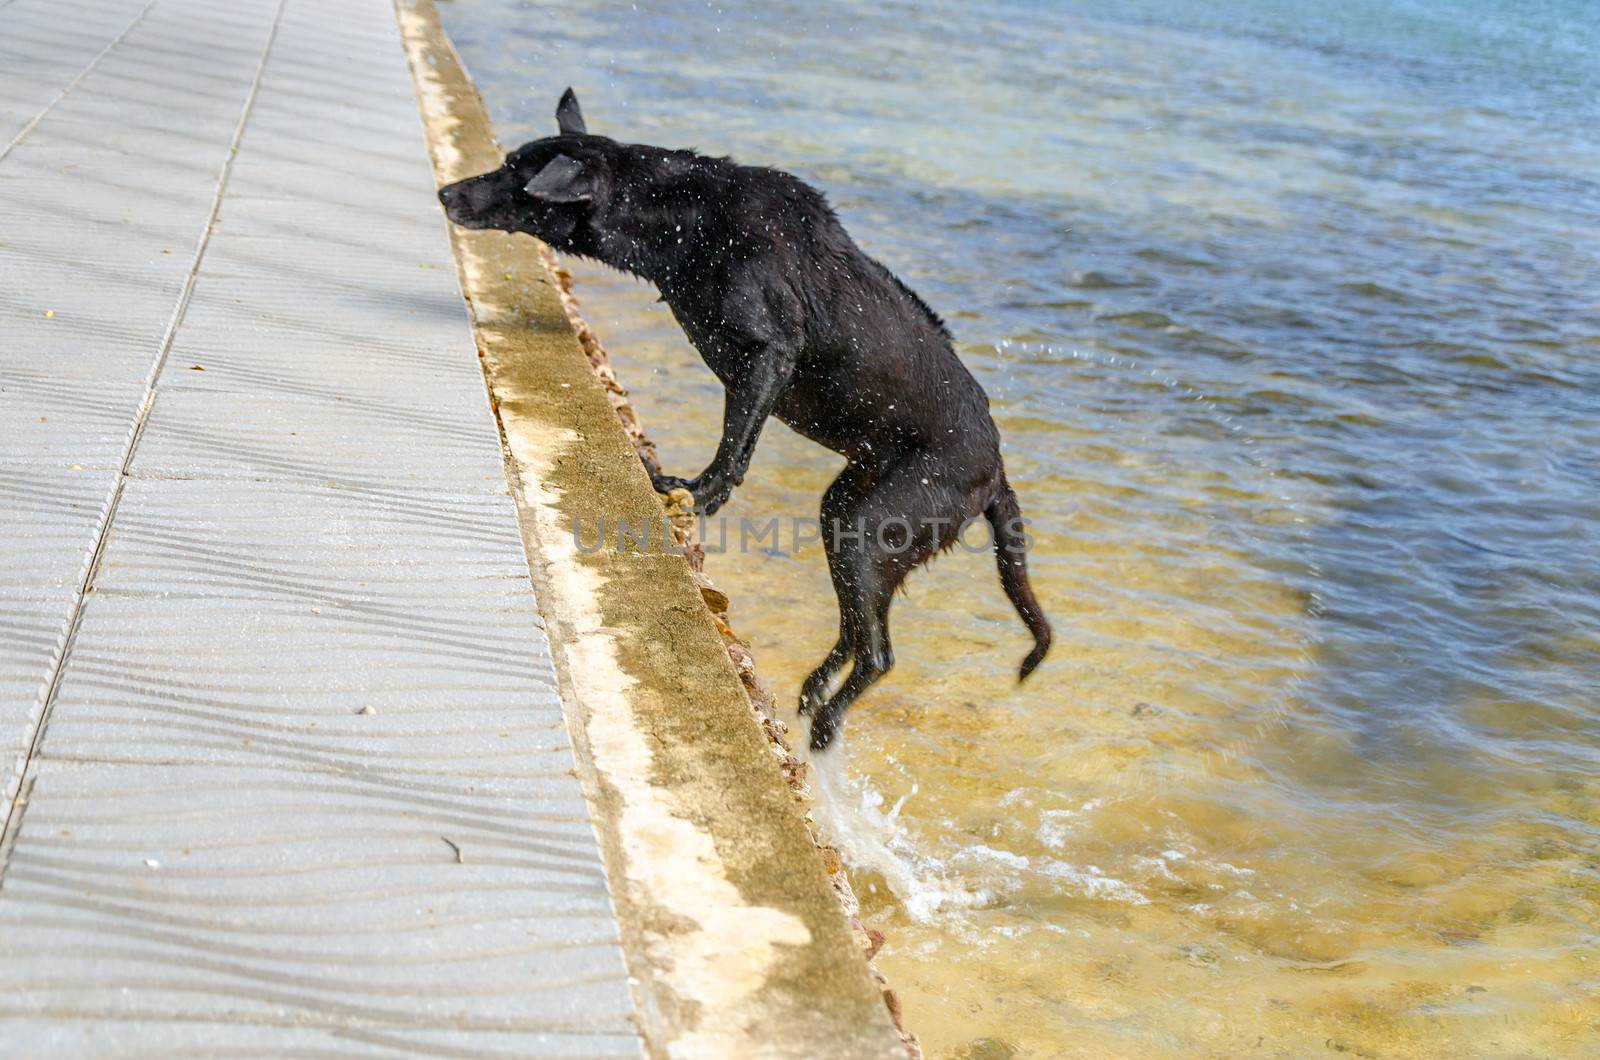 Wet Caribbean Dog by jkraft5